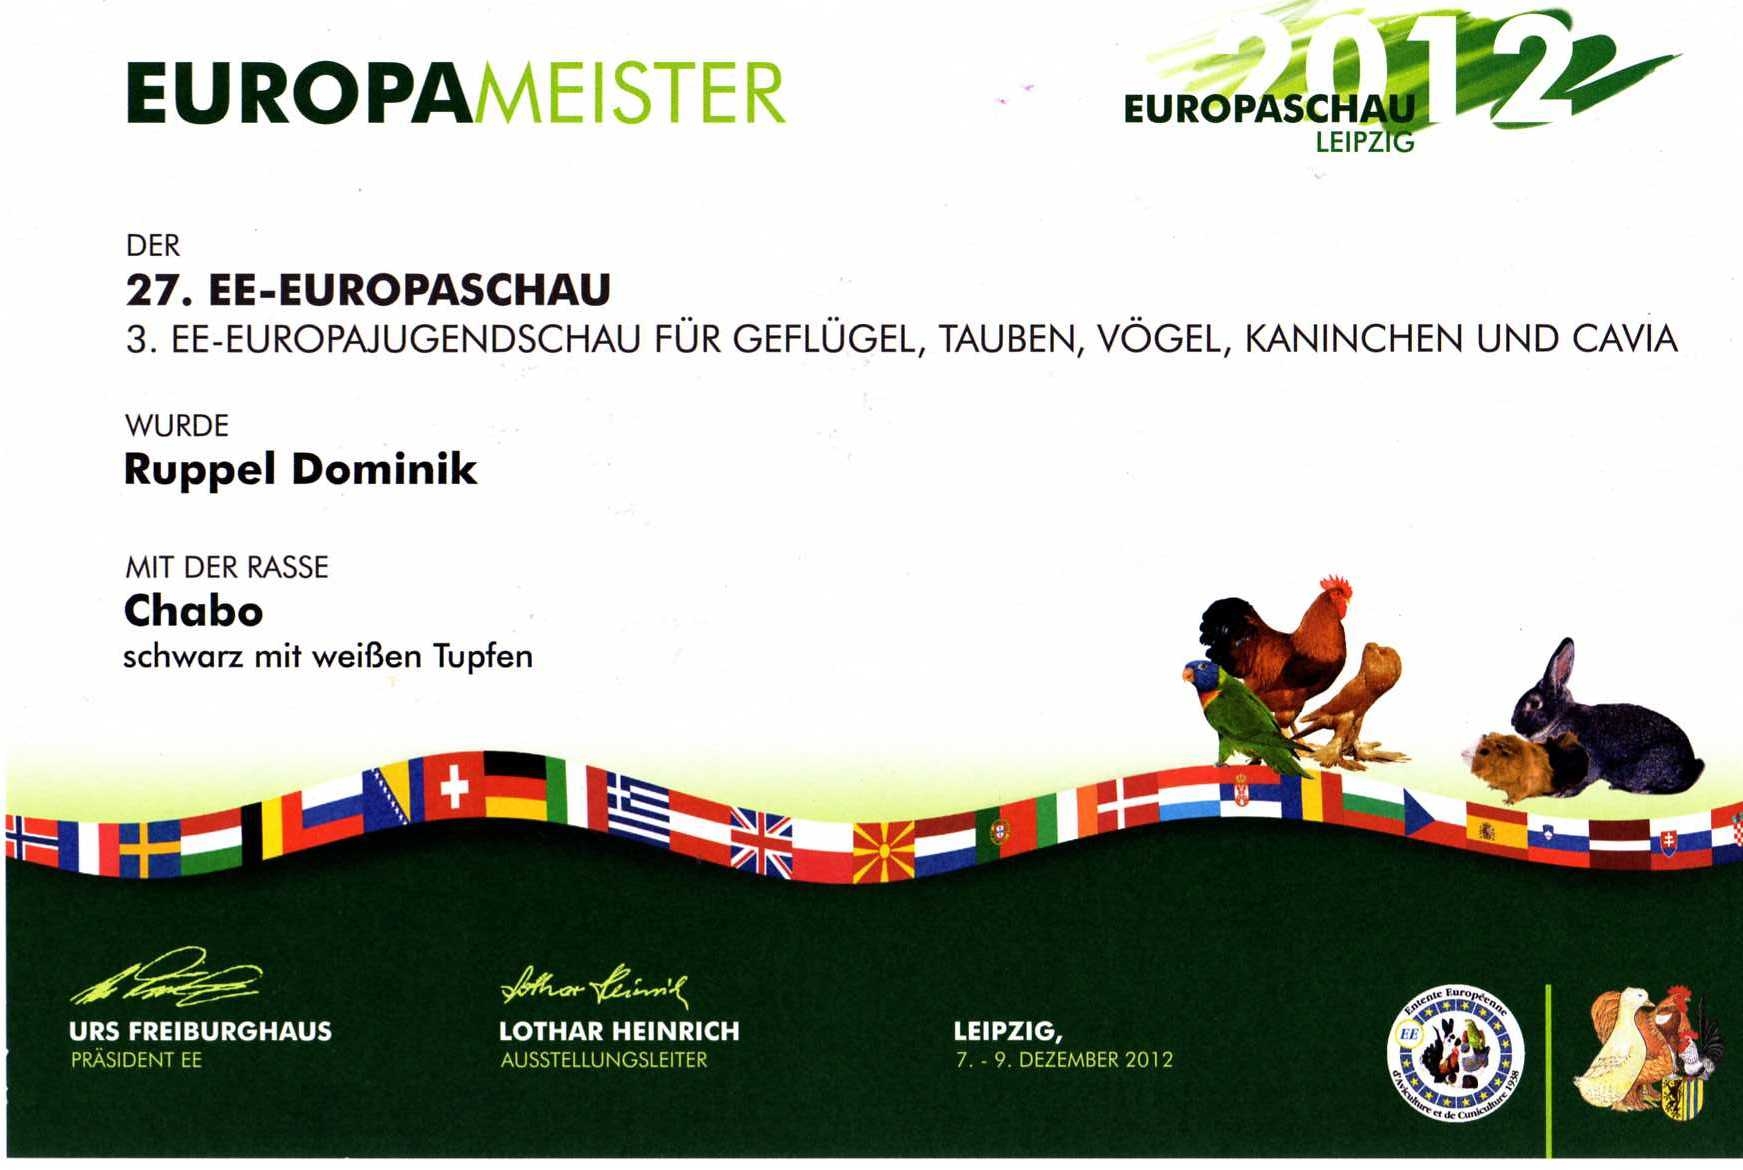 Europameister 2012